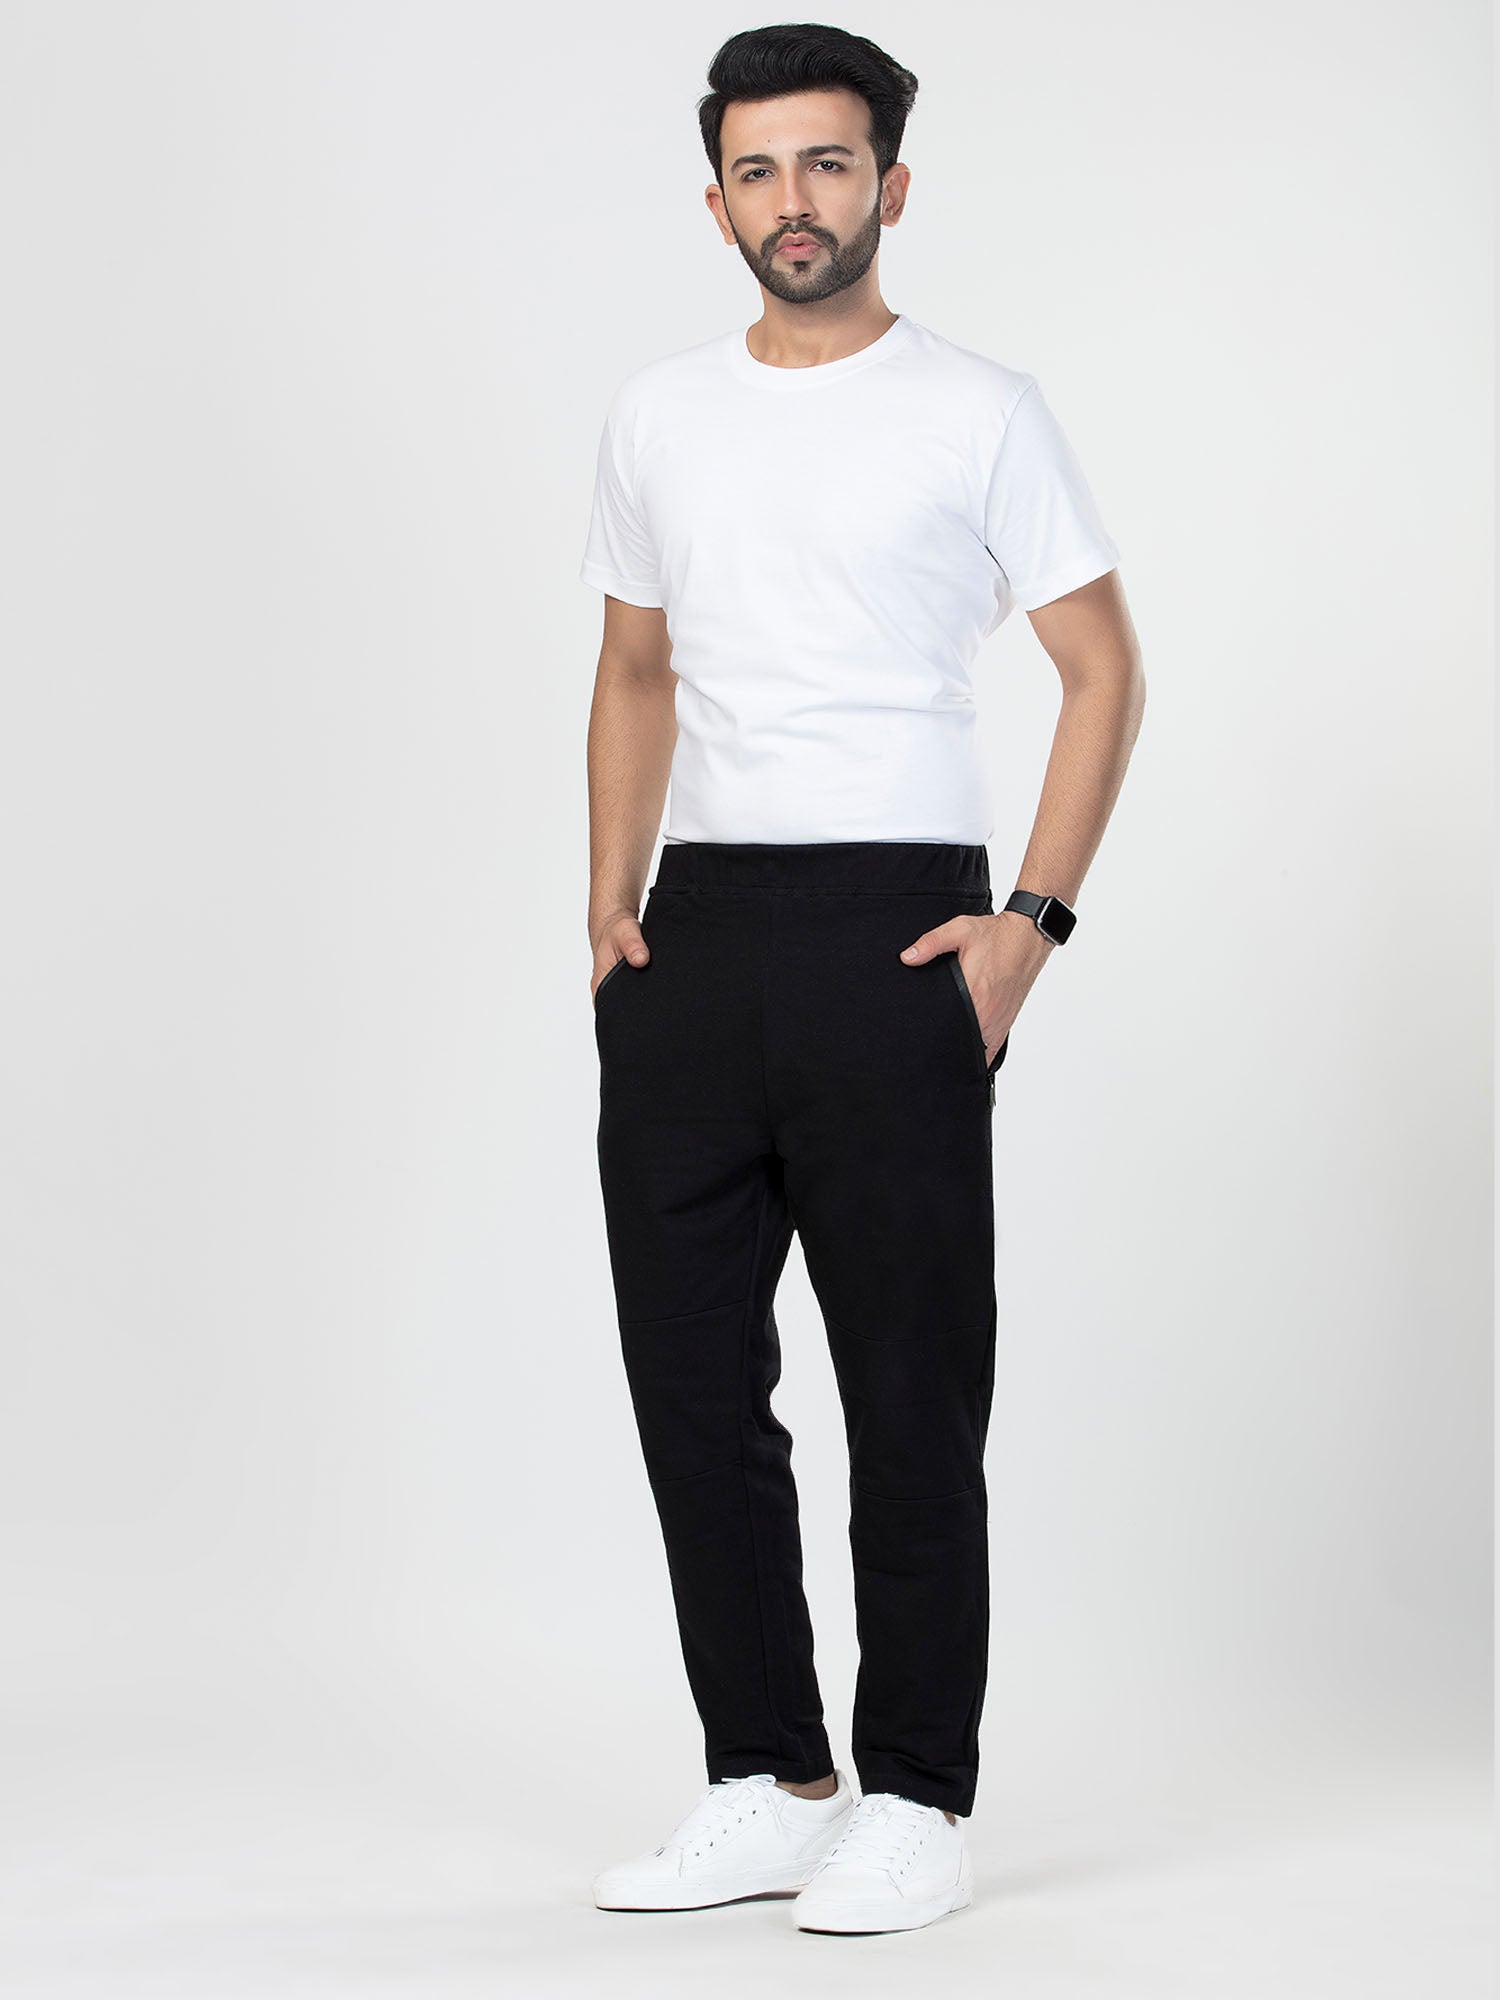 Basic Premium Sweatpants - Black - keos.life